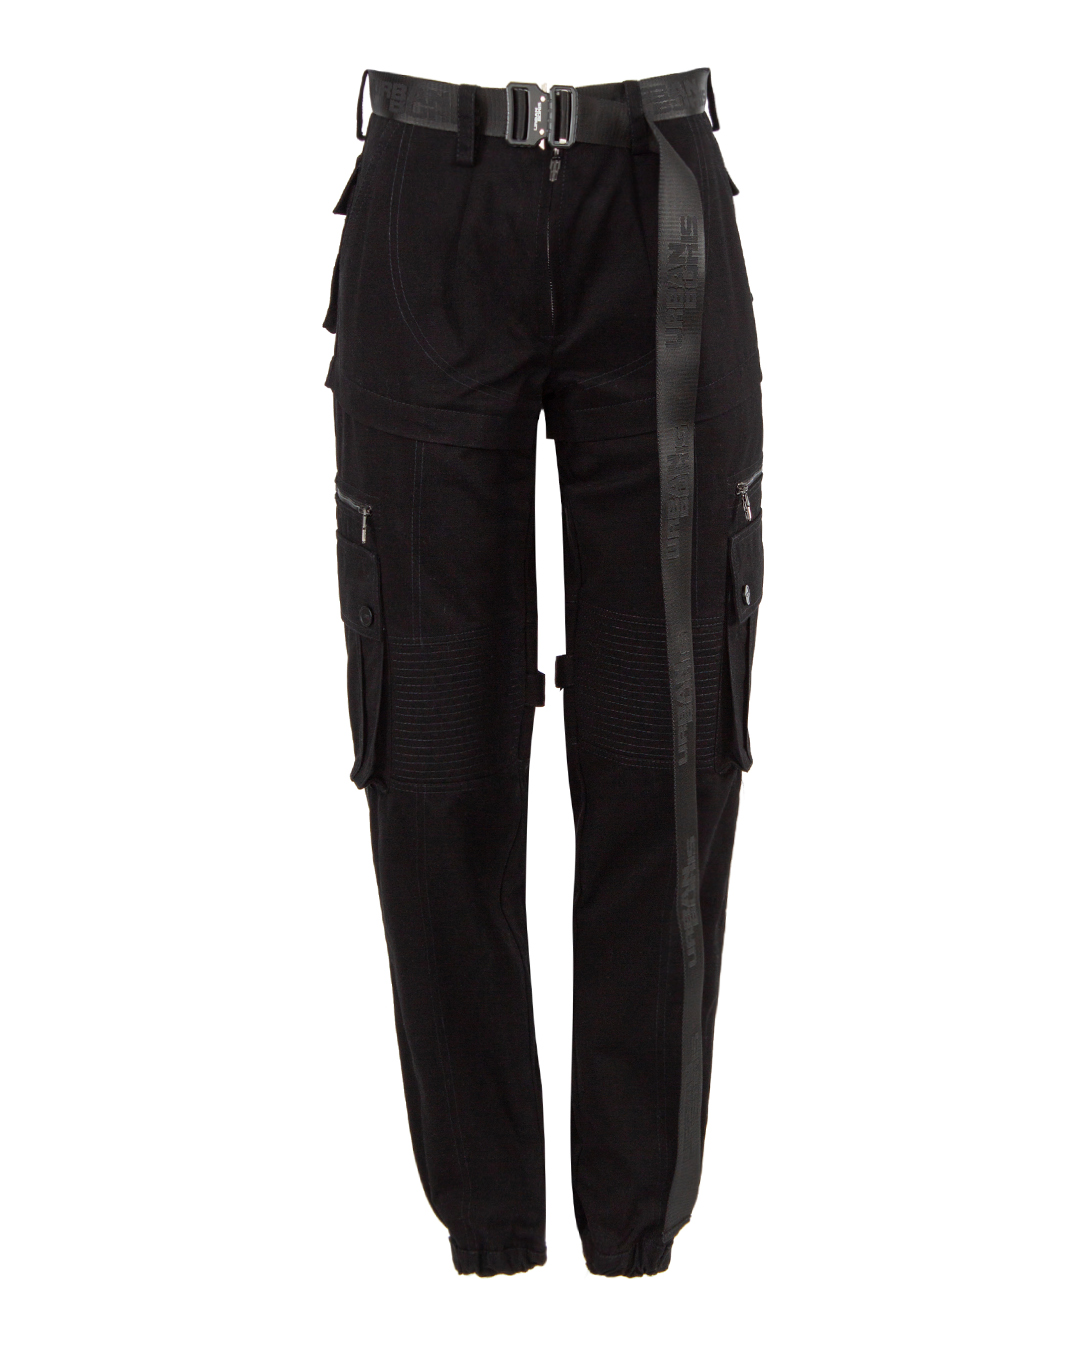 брюки карго URBAN BORIS PNT04-F черный xl, размер xl - фото 1